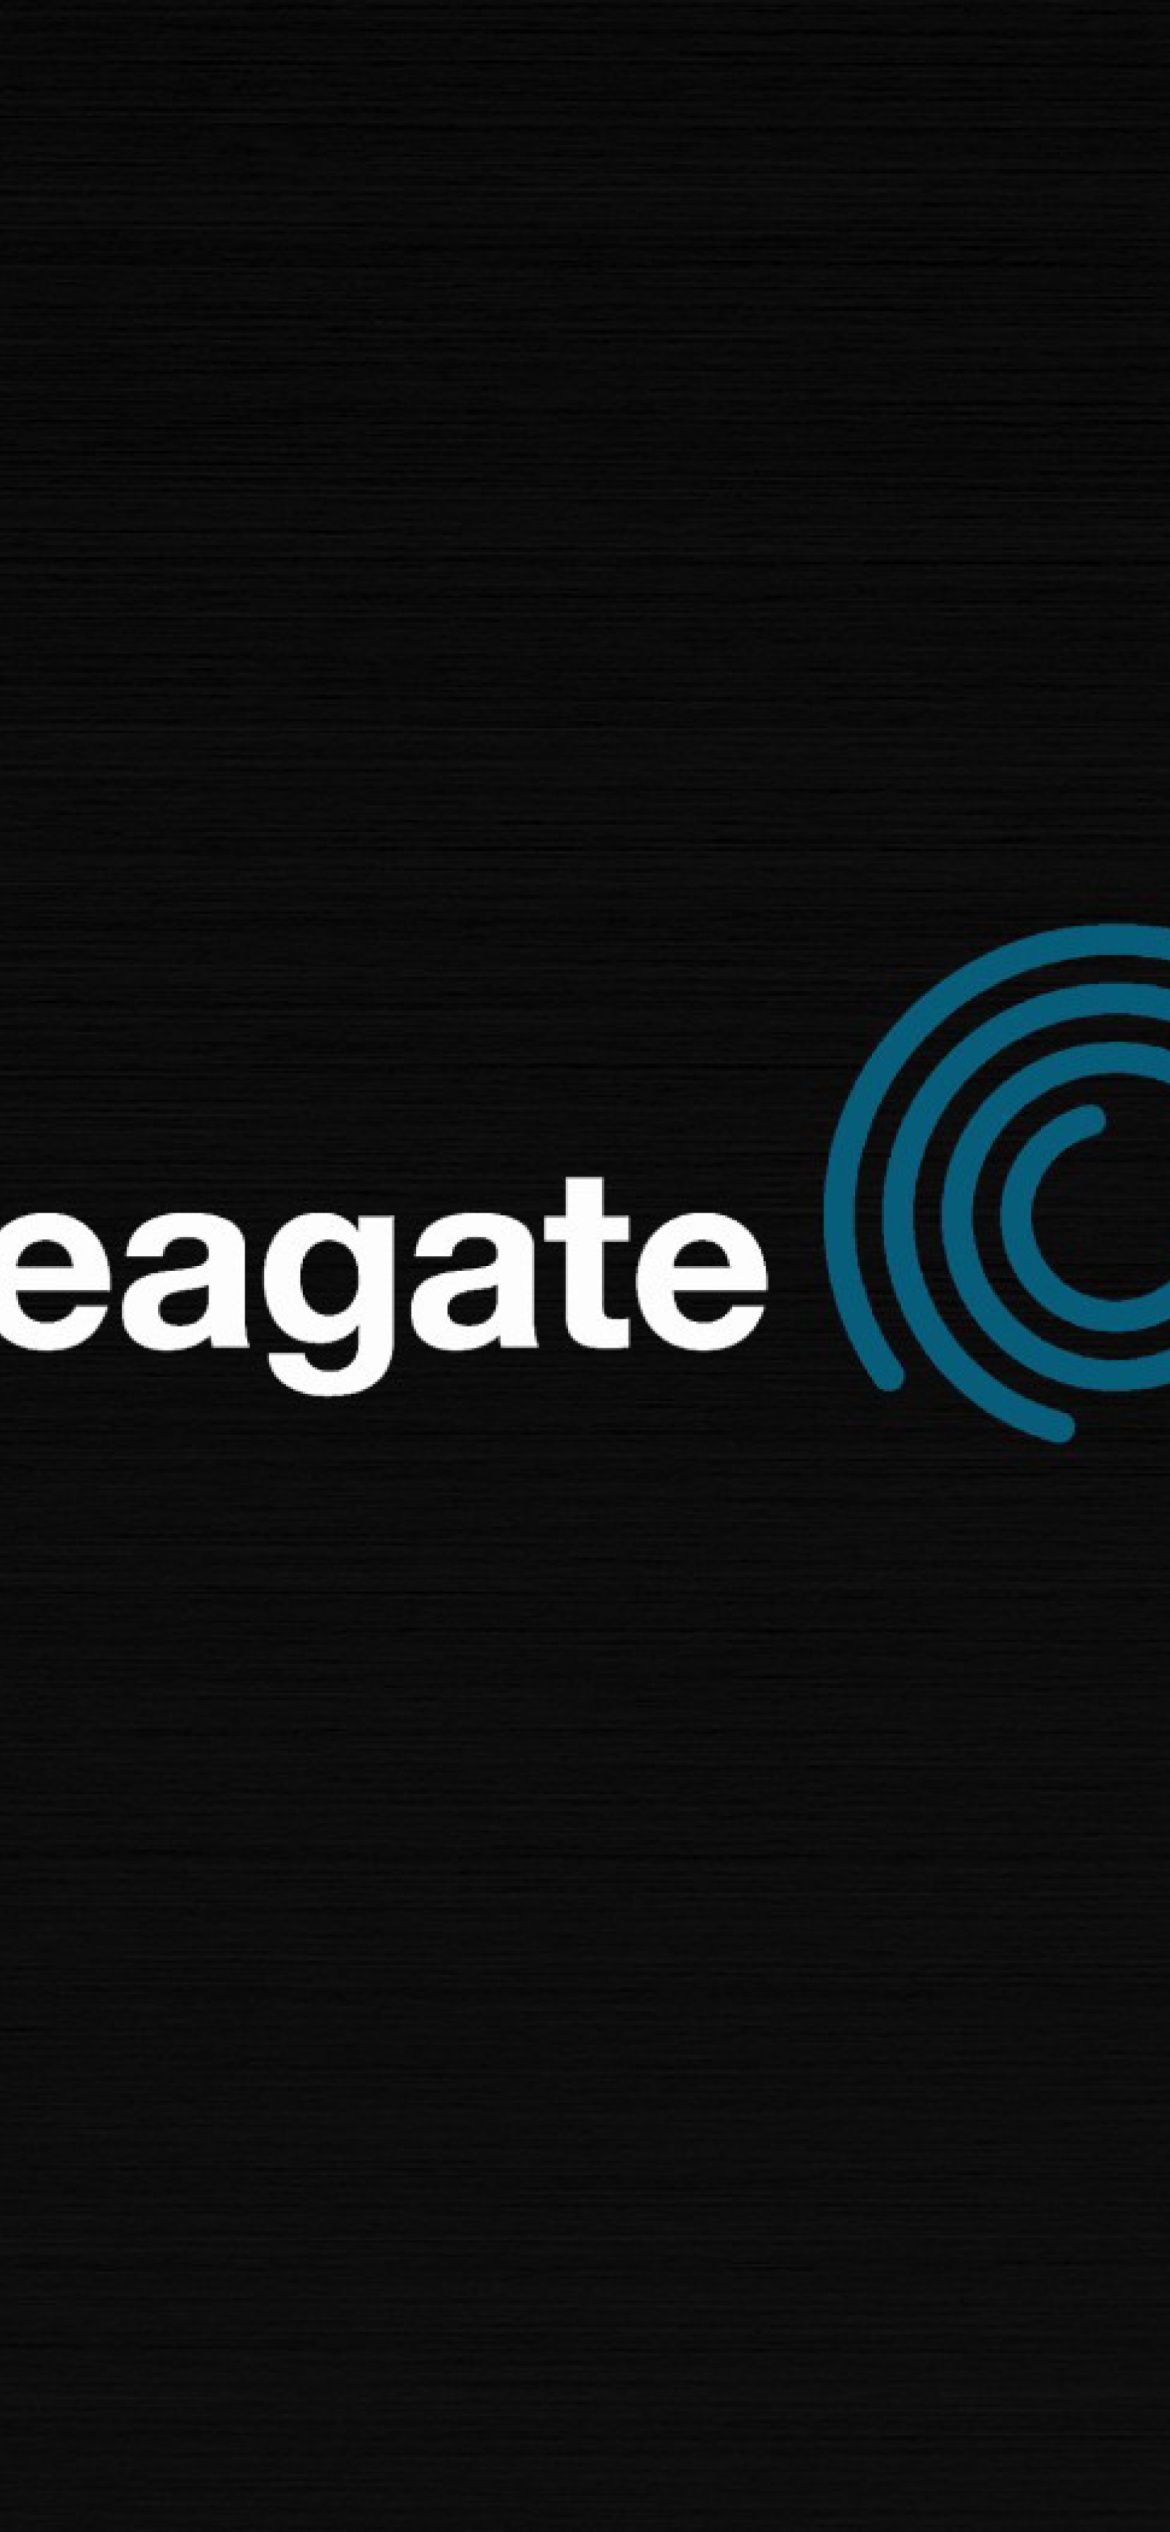 Seagate Logo wallpaper 1170x2532